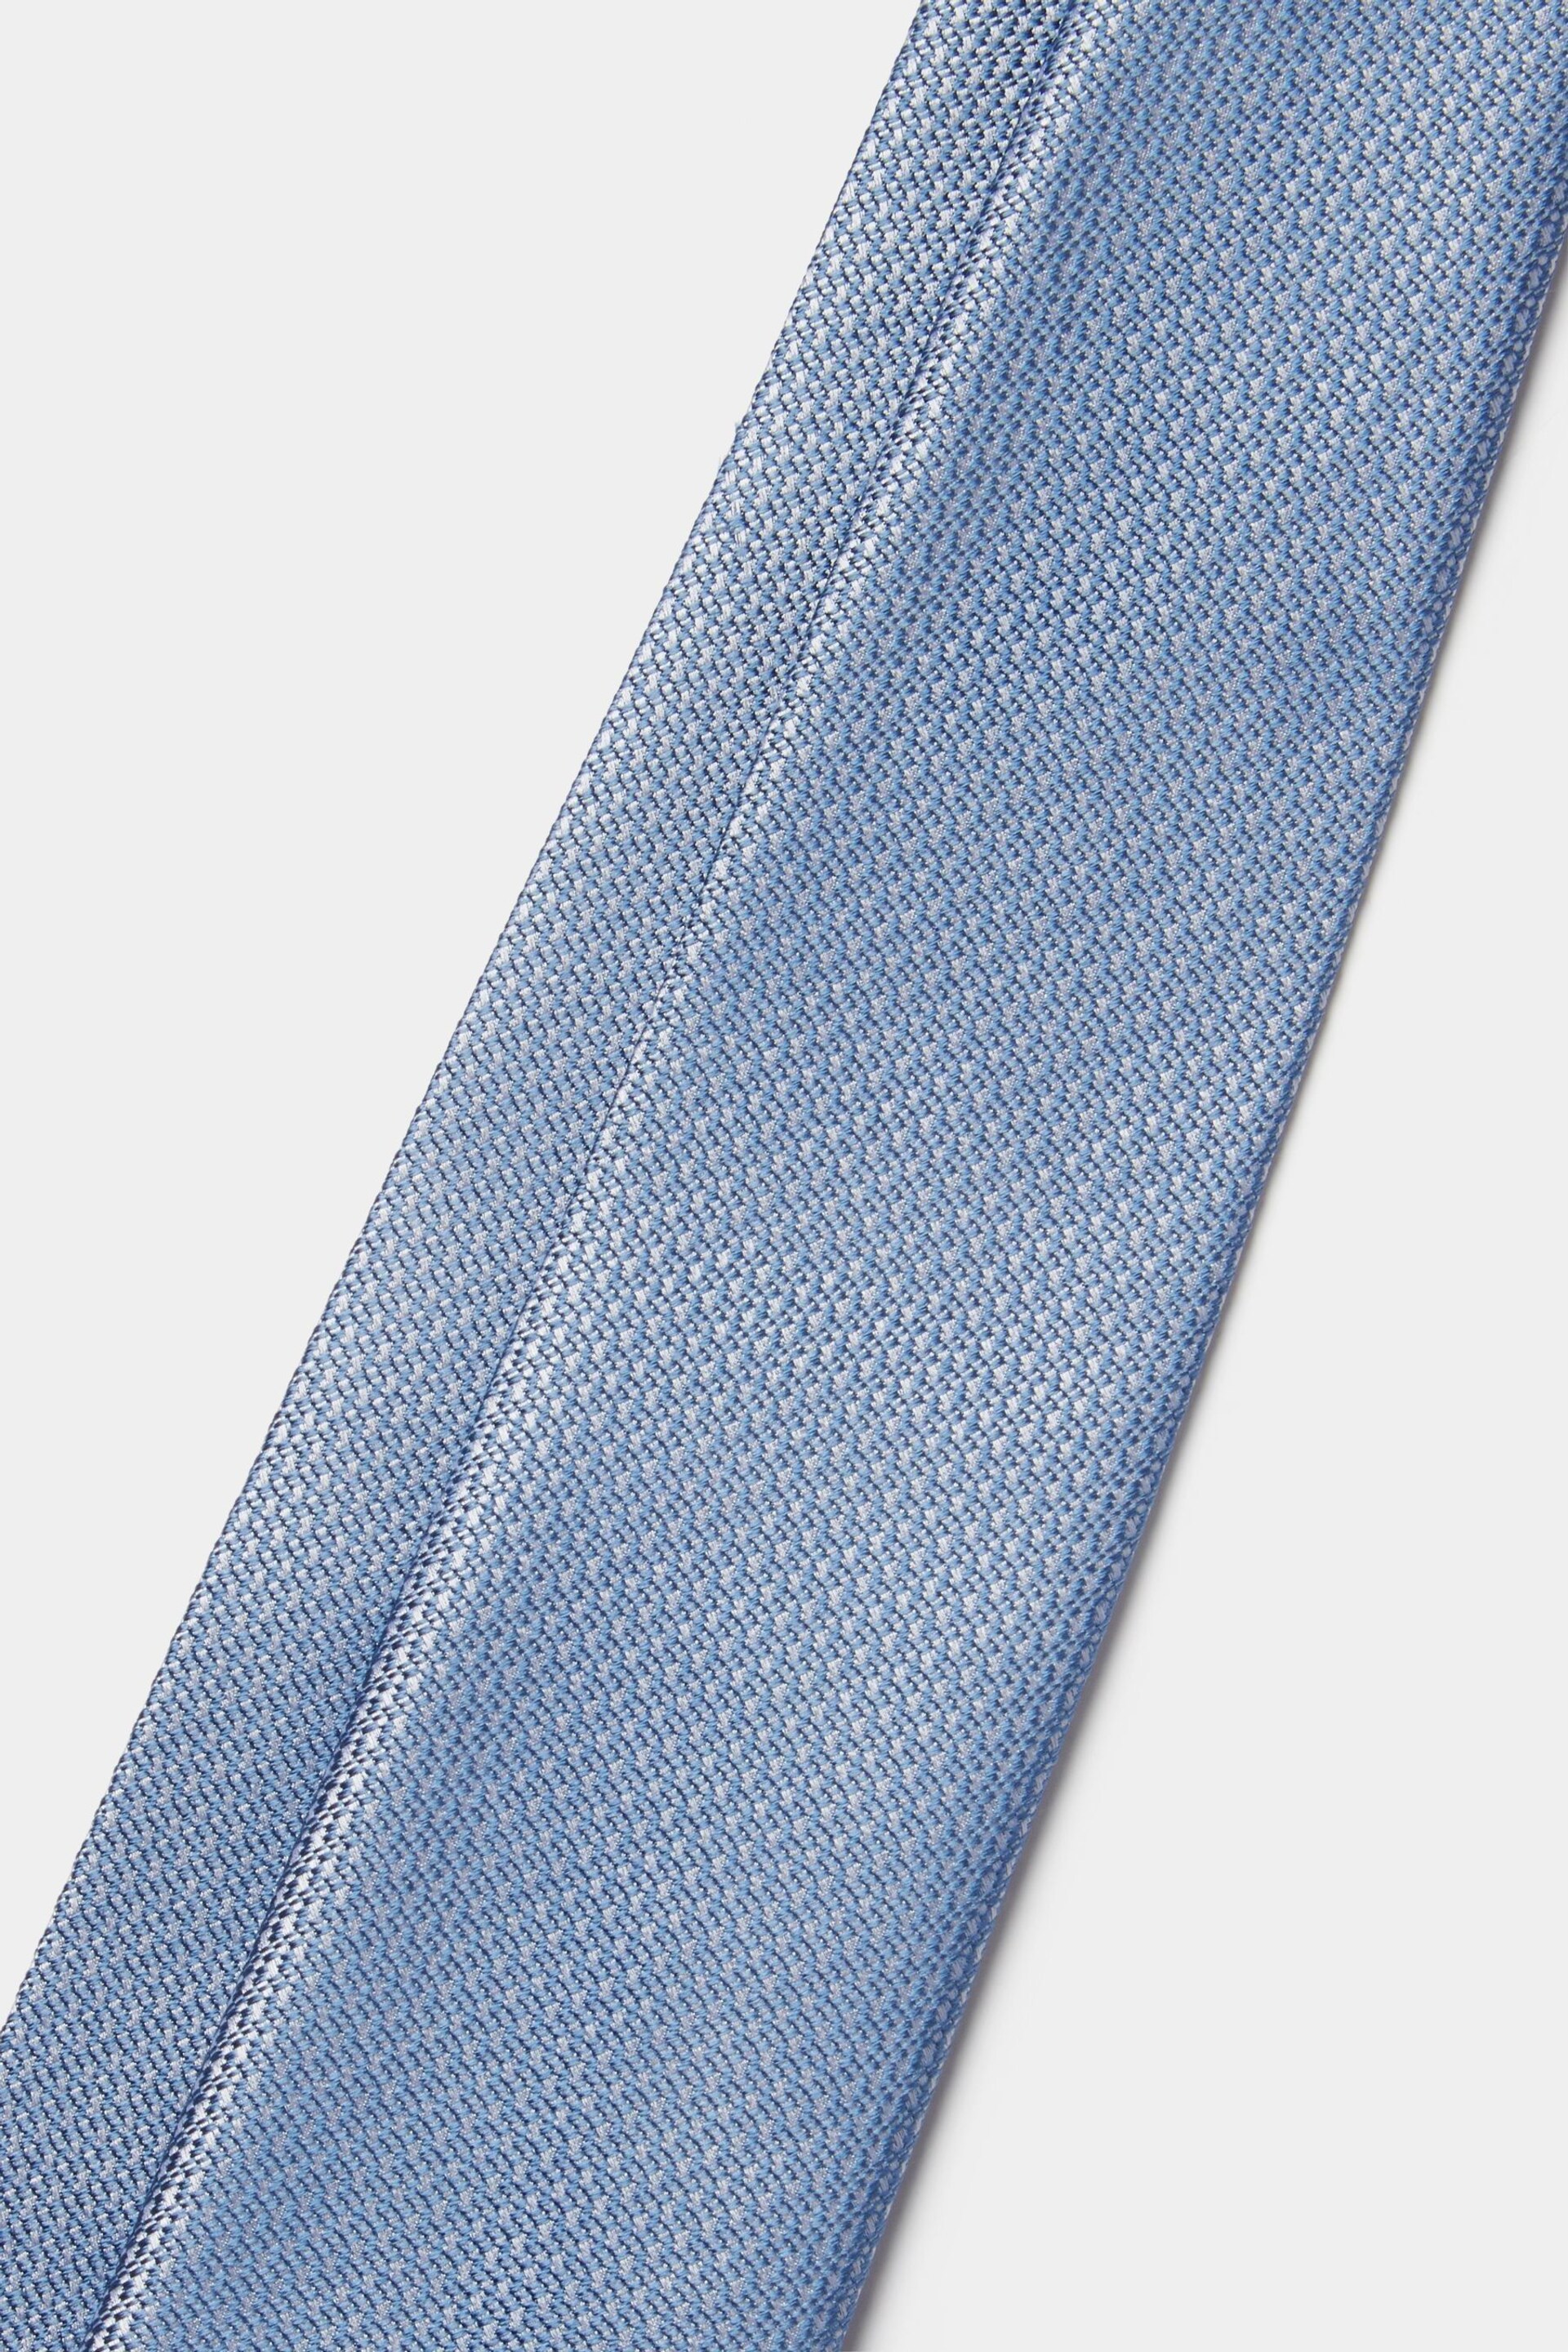 Peckham Rye Tie - Image 3 of 3